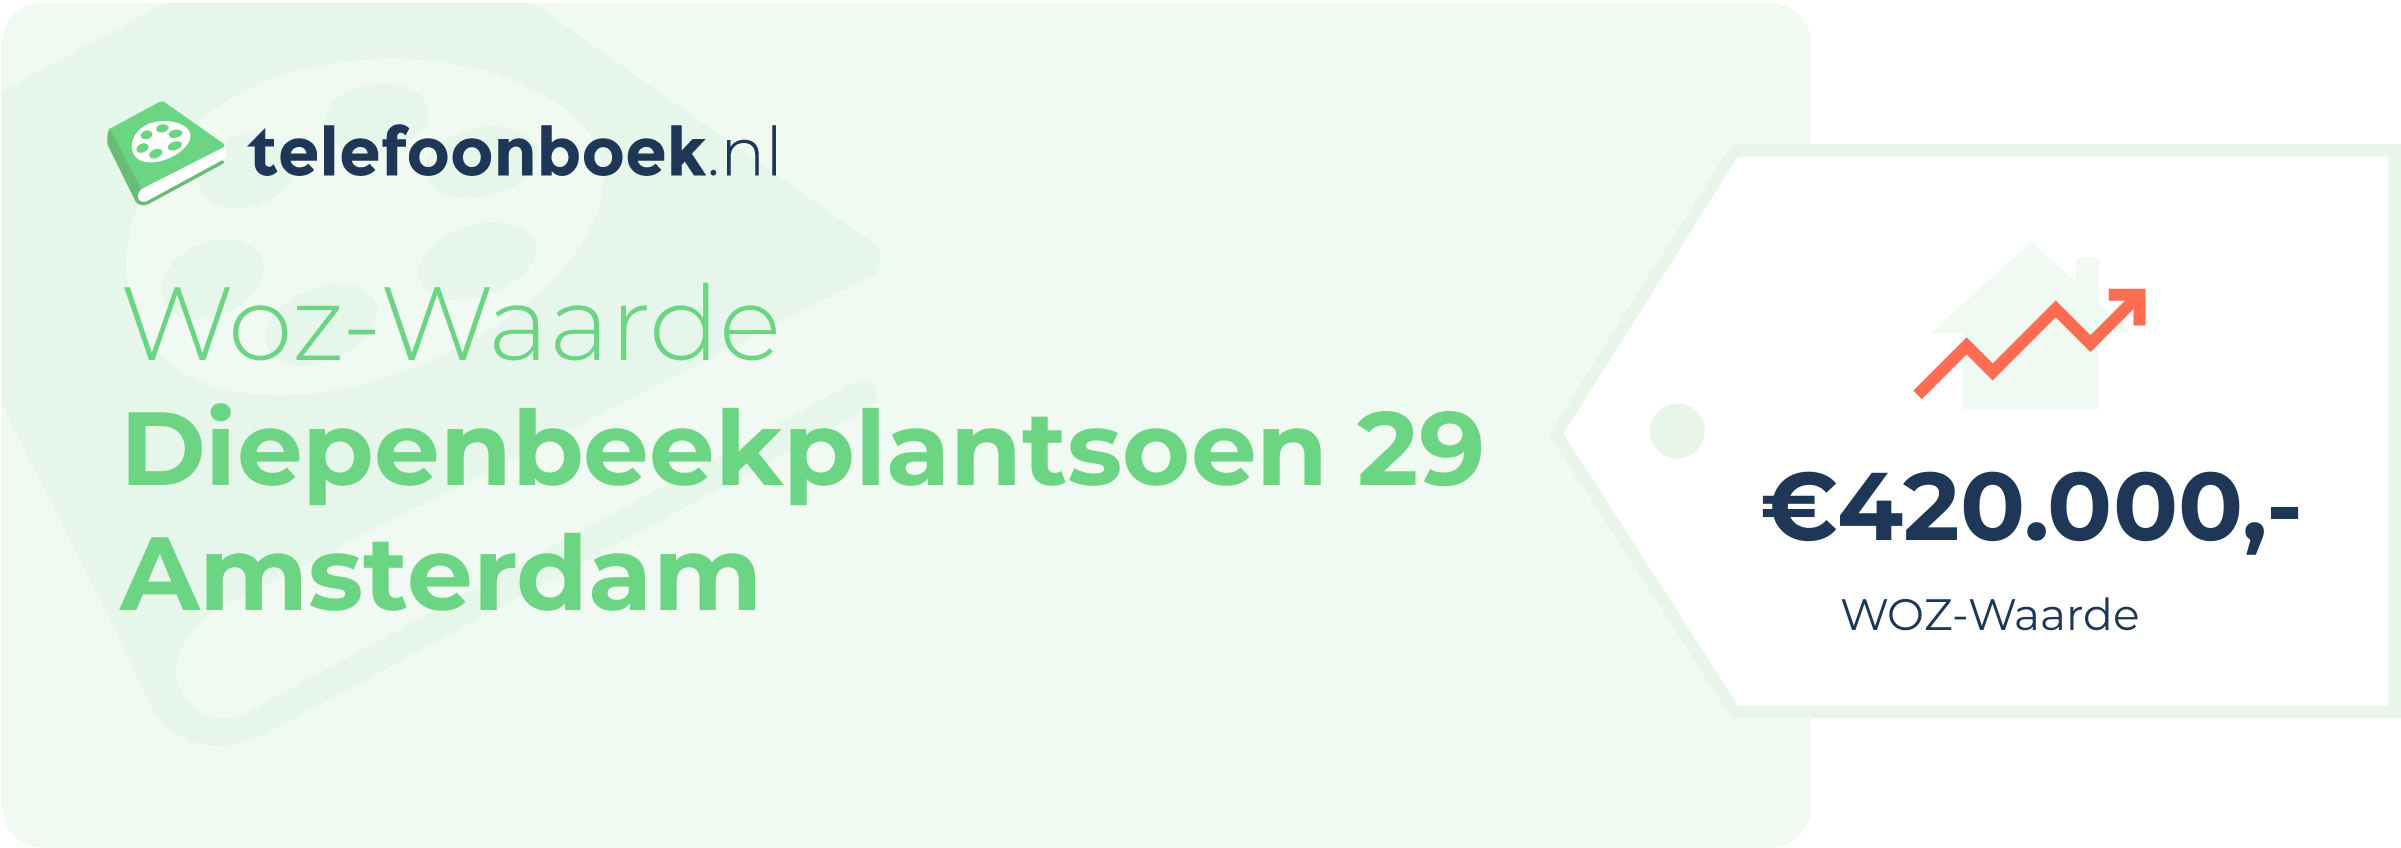 WOZ-waarde Diepenbeekplantsoen 29 Amsterdam